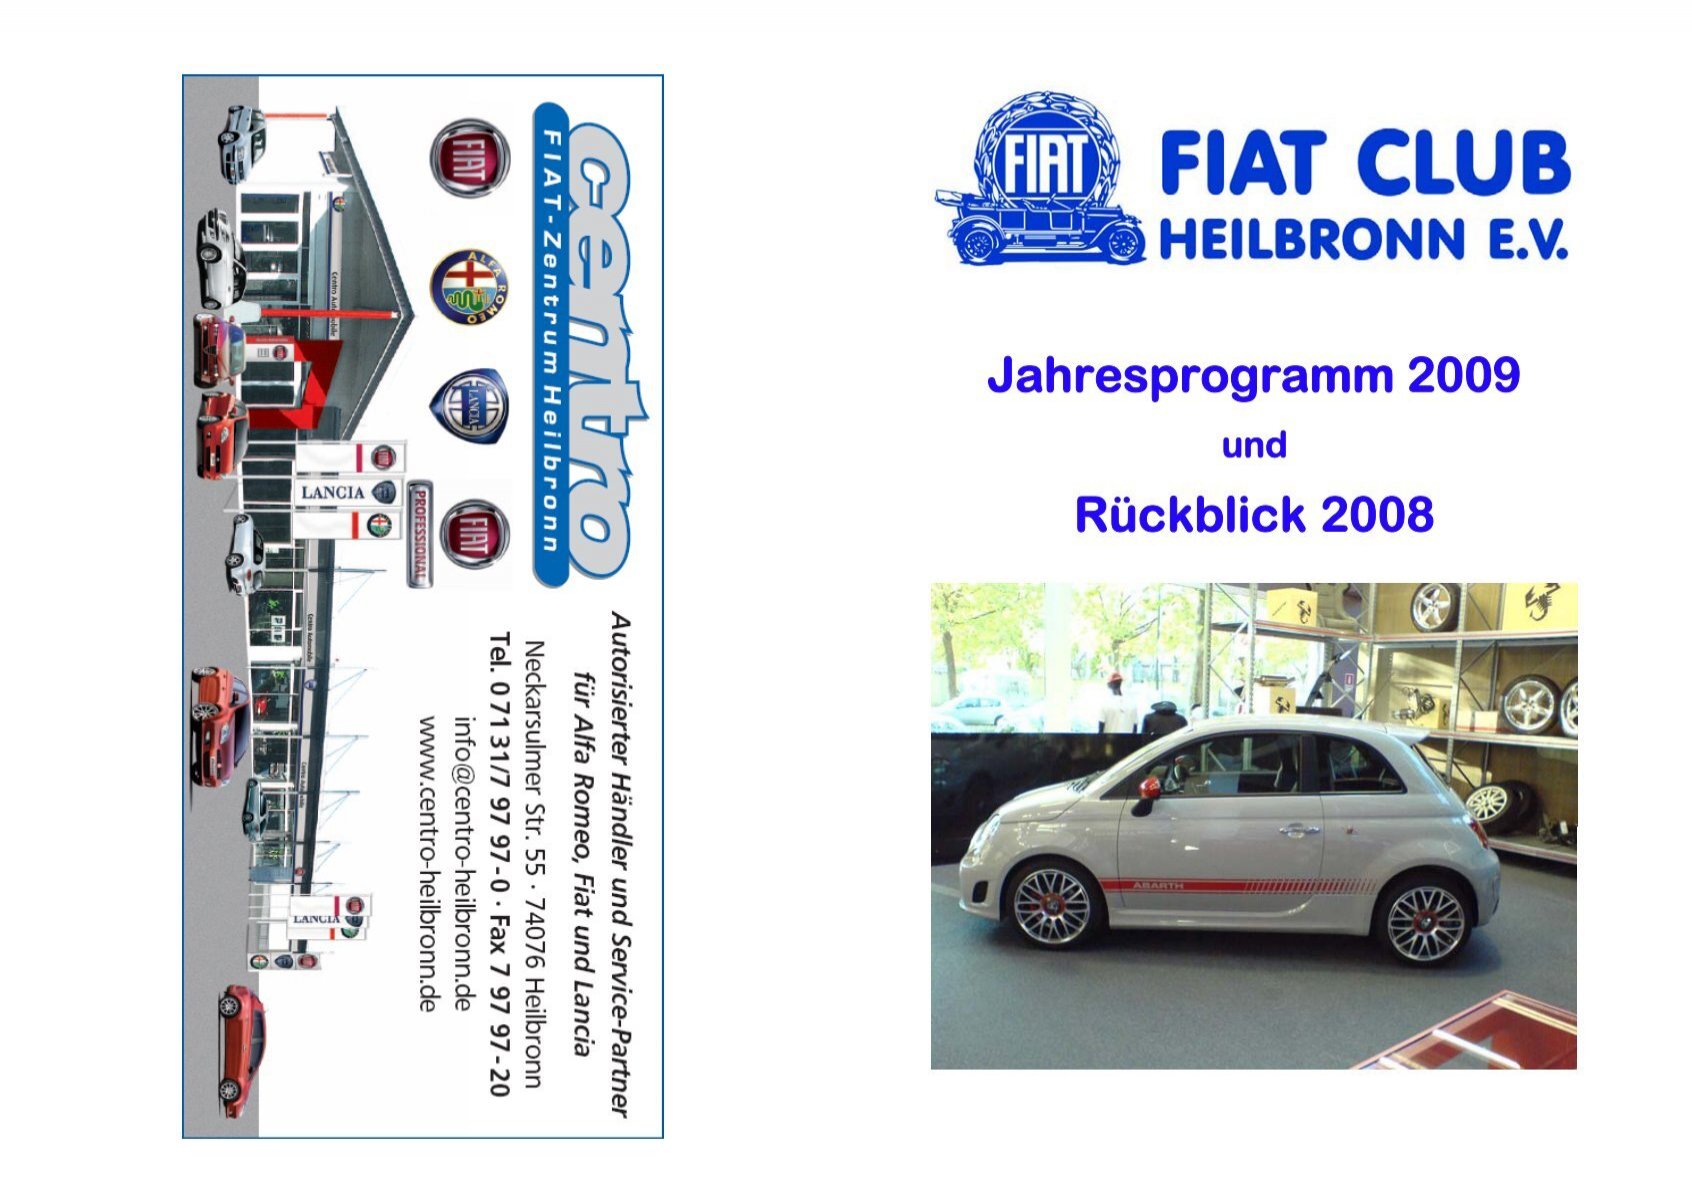 Jahresprogramm 09 Ruckblick 08 Fiat Club Heilbronn Ev